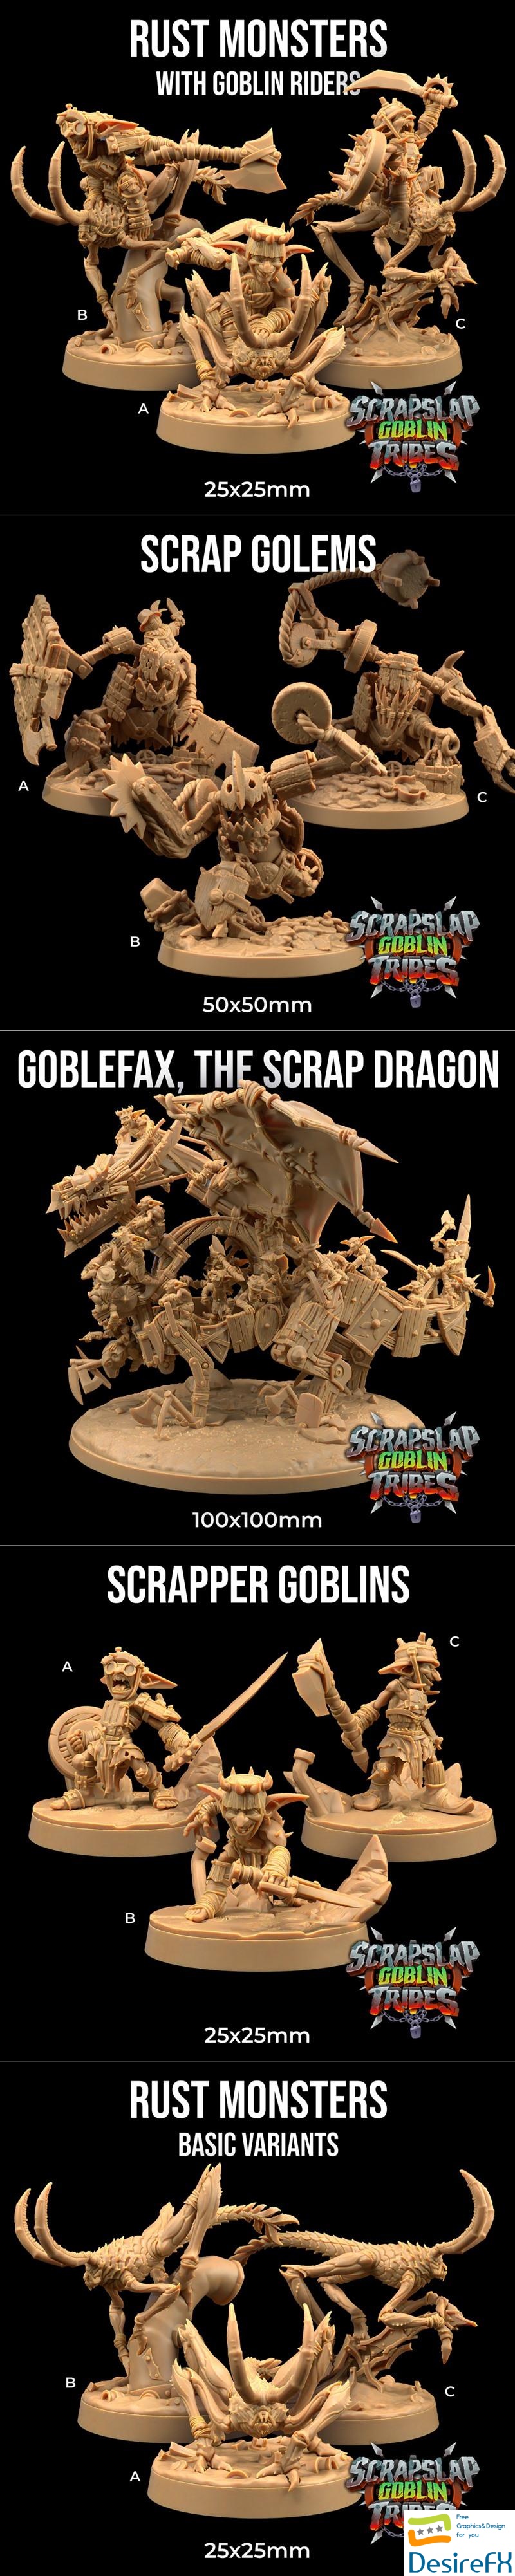 The Dragon Trappers Lodge - Scrap Slap Goblin Tribes - Trapper Tier 3D Print